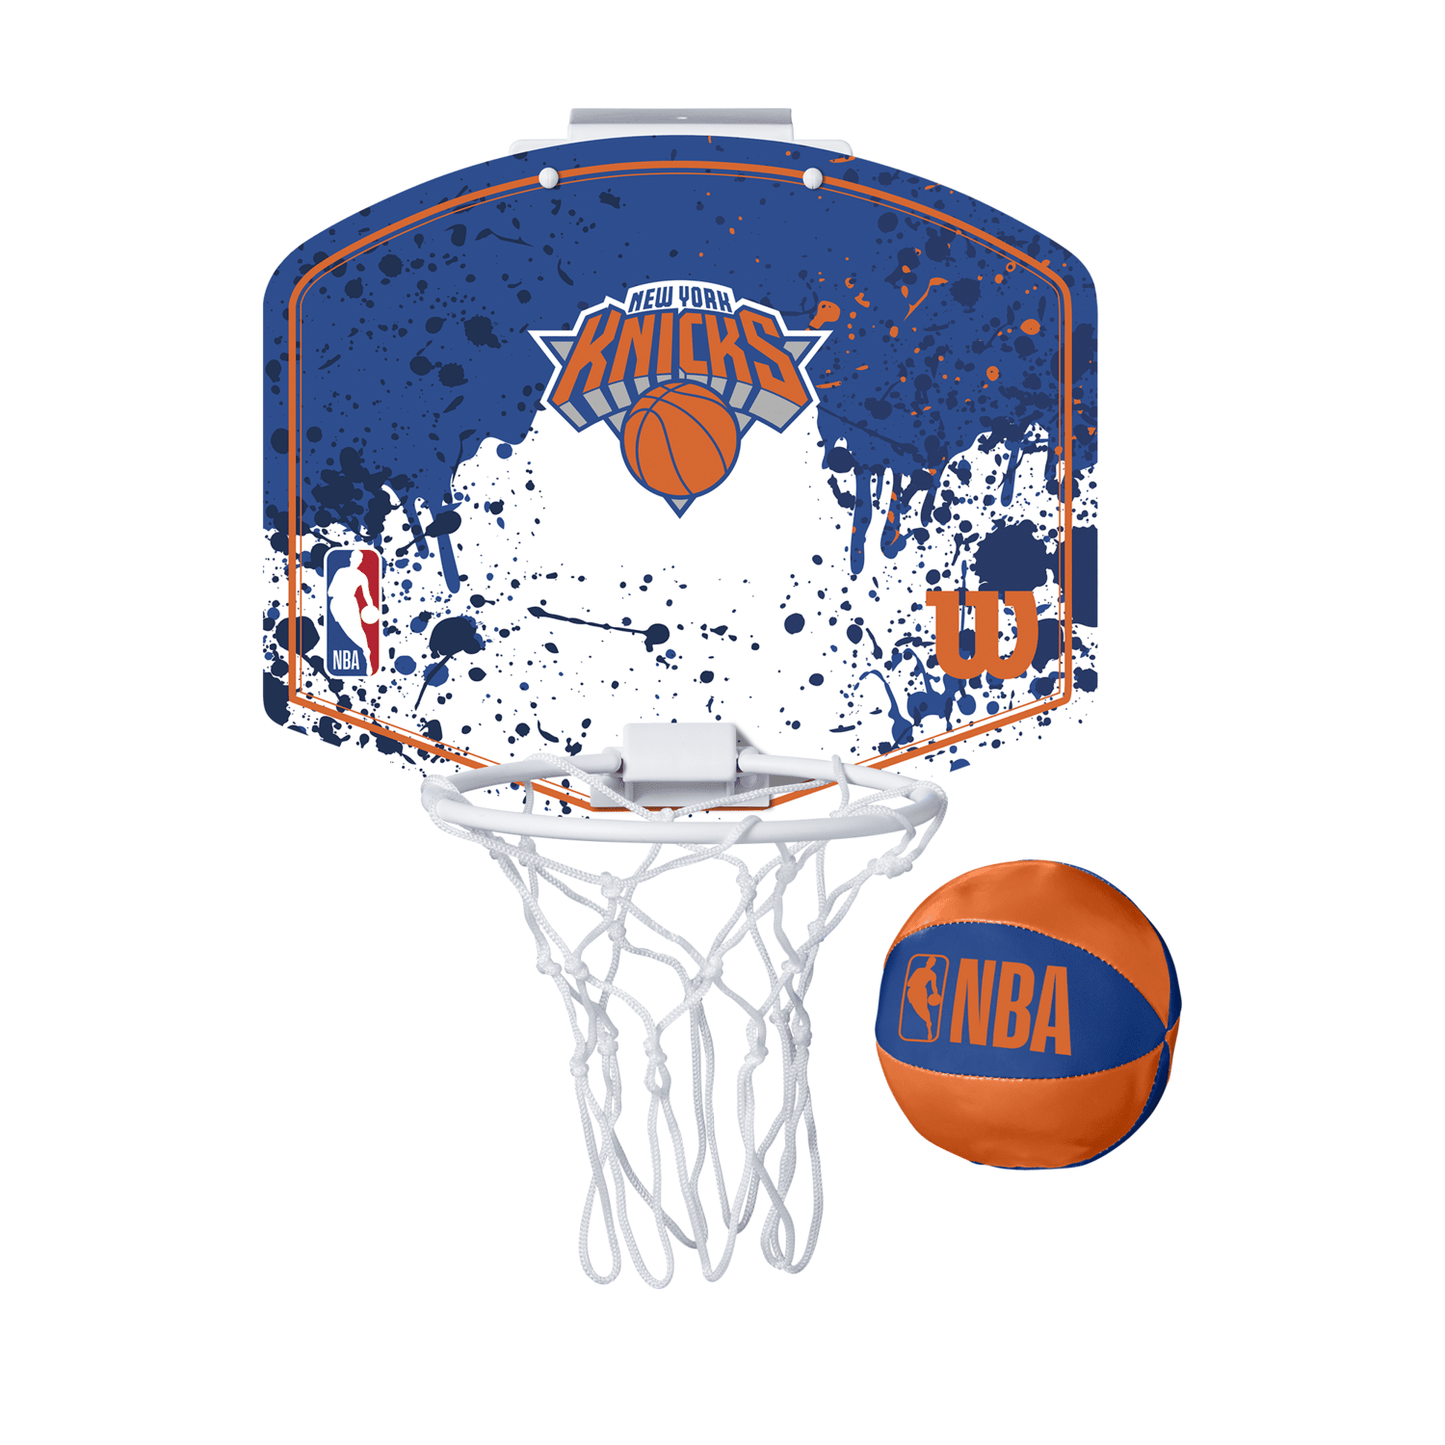 Wilson Knicks Mini Hoop Basketball Set - Main View